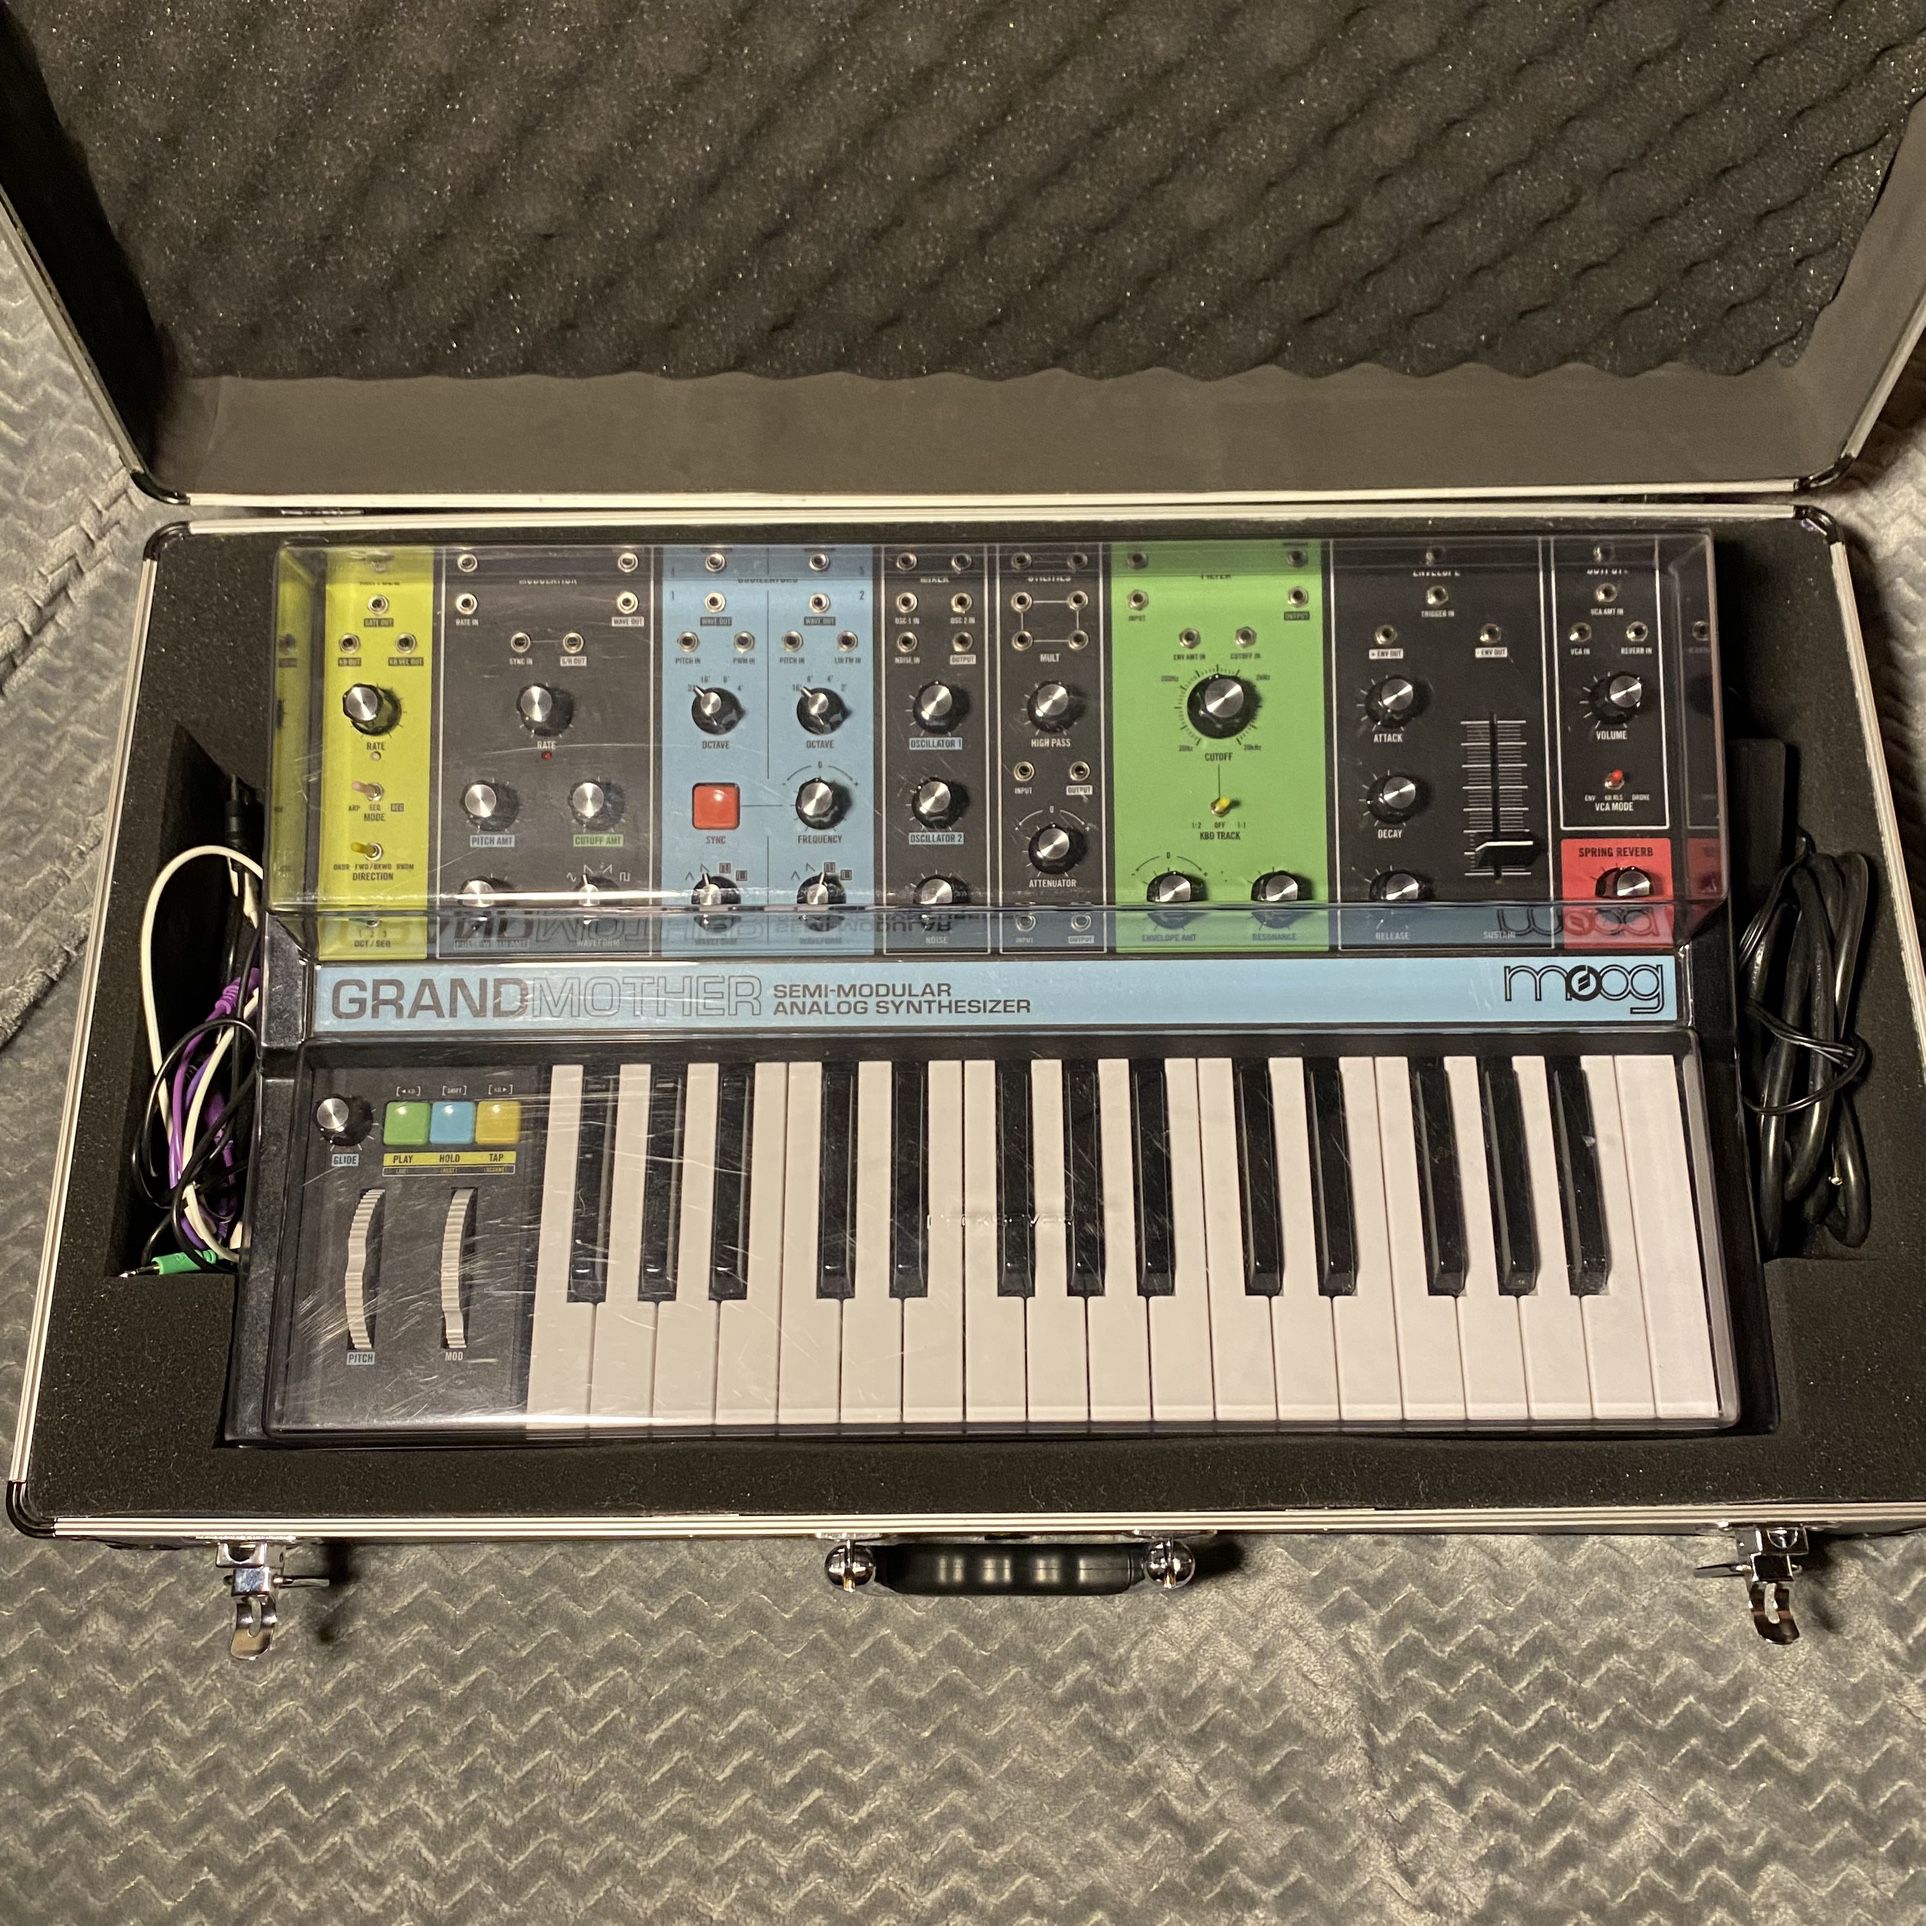 Moog Grandmother Synthesizer Hard Case and Desk Saver Included (Read Description)